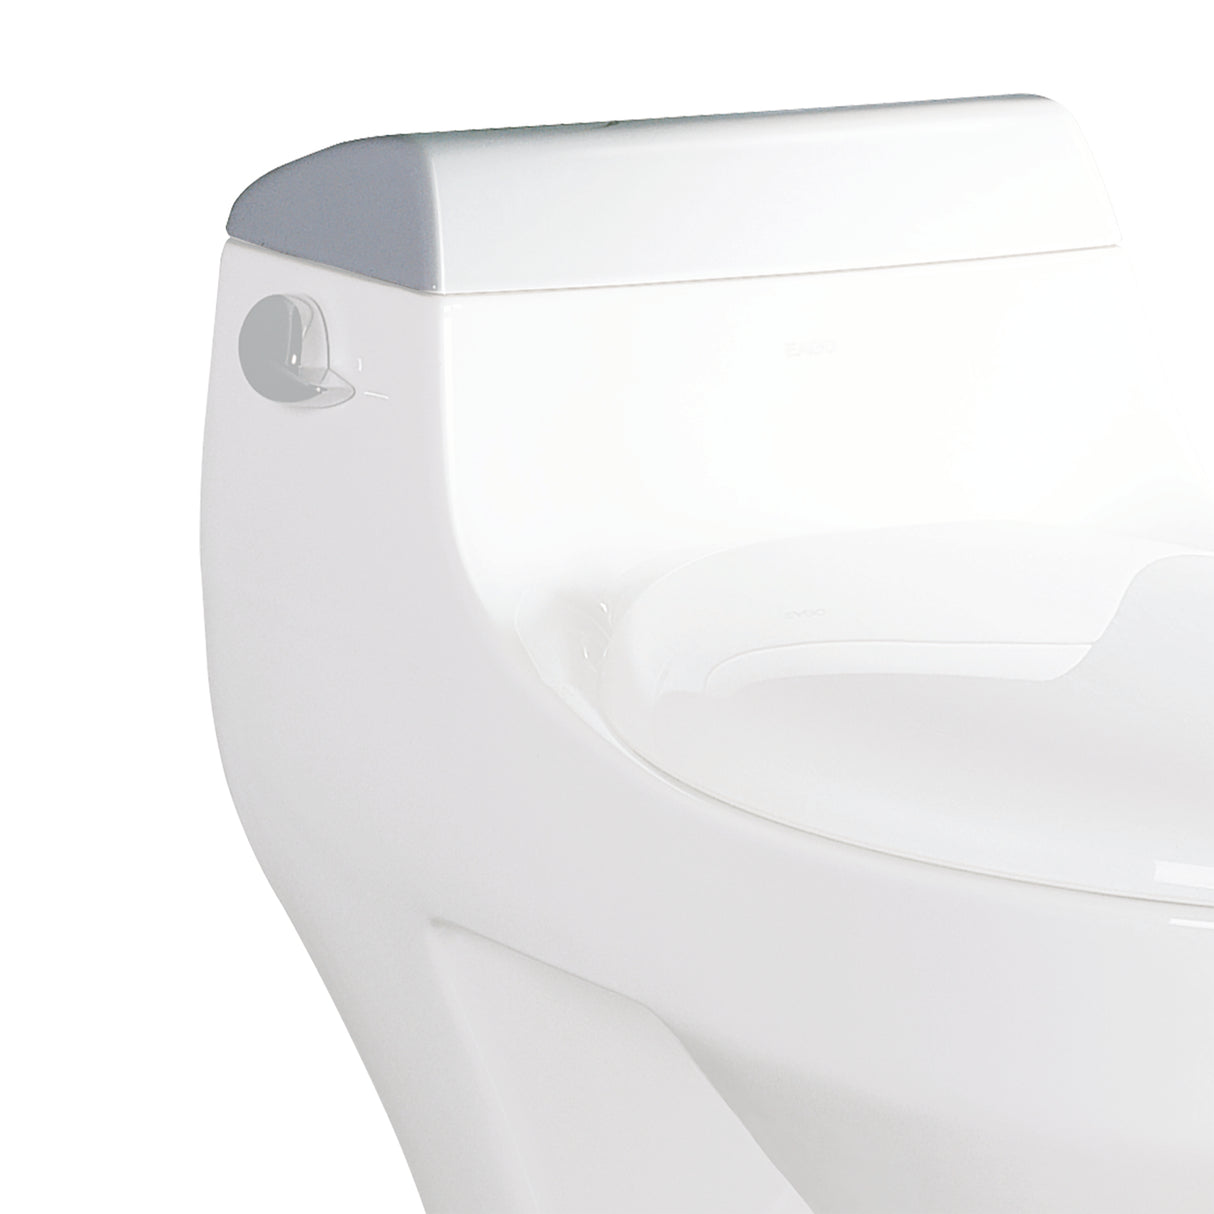 EAGO R-108LID Replacement Ceramic Toilet Lid for TB108